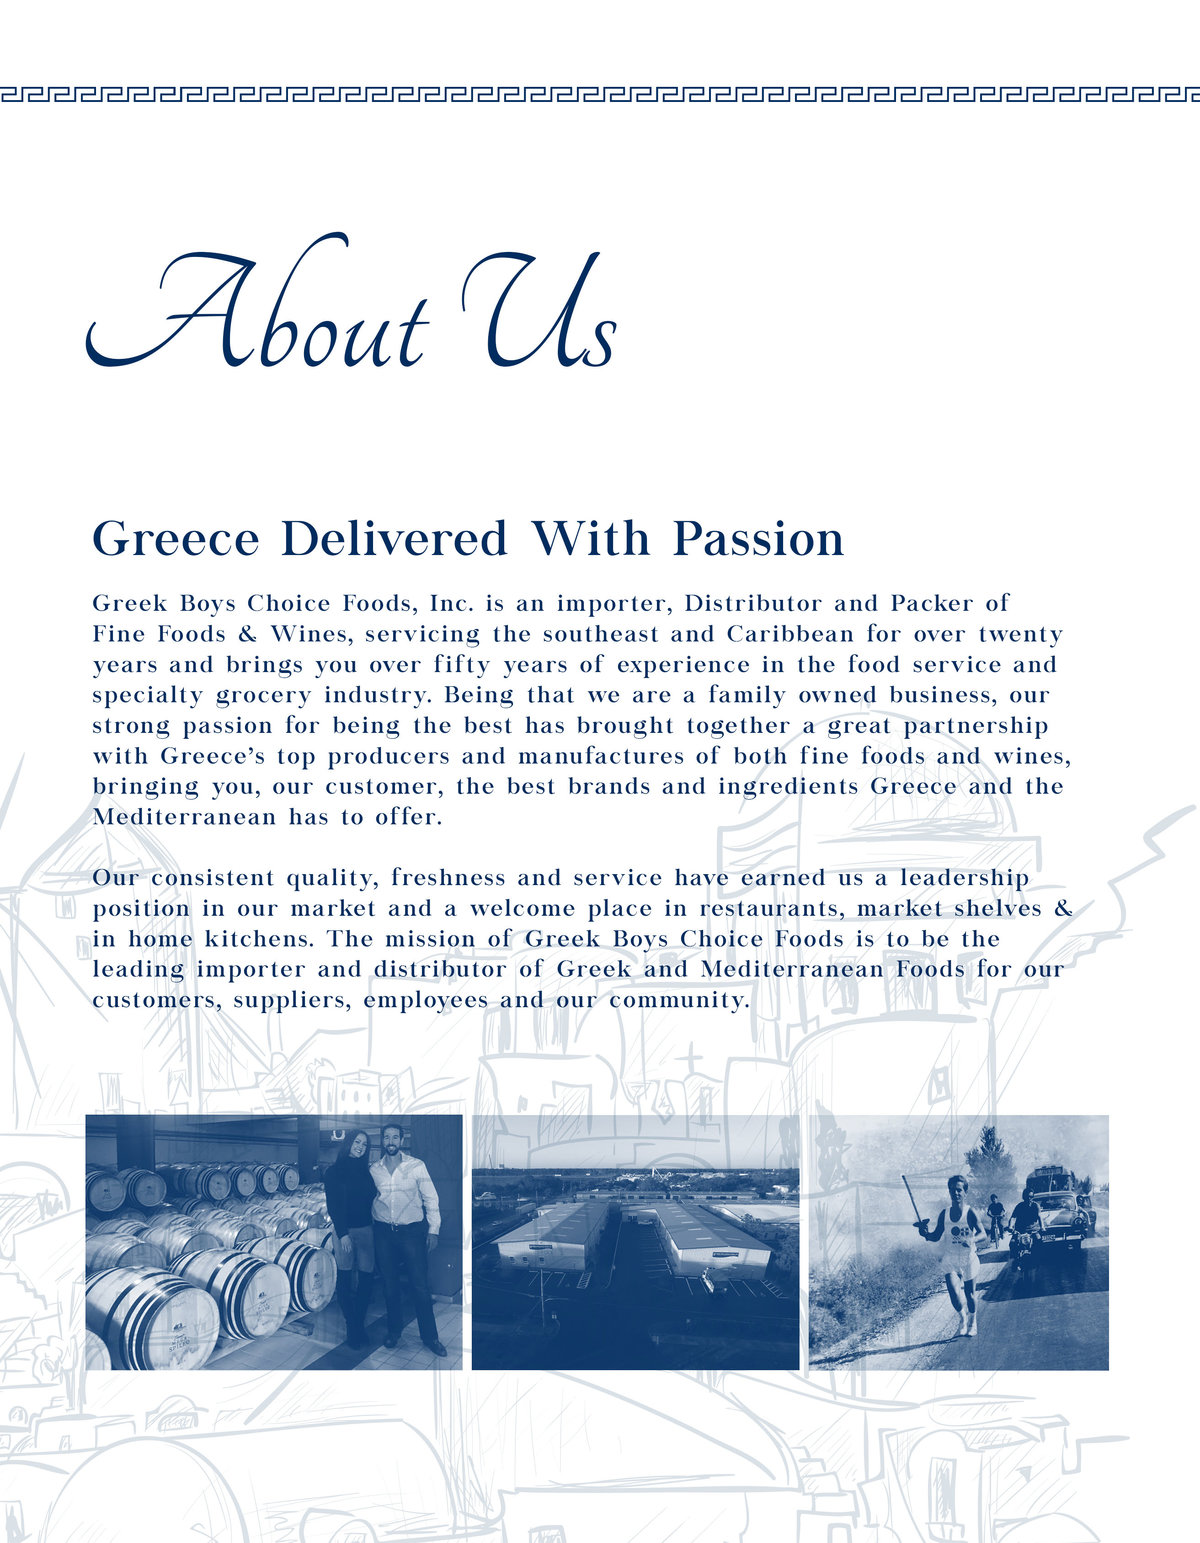 GreekBoys_Wine&Liquor_Page_03